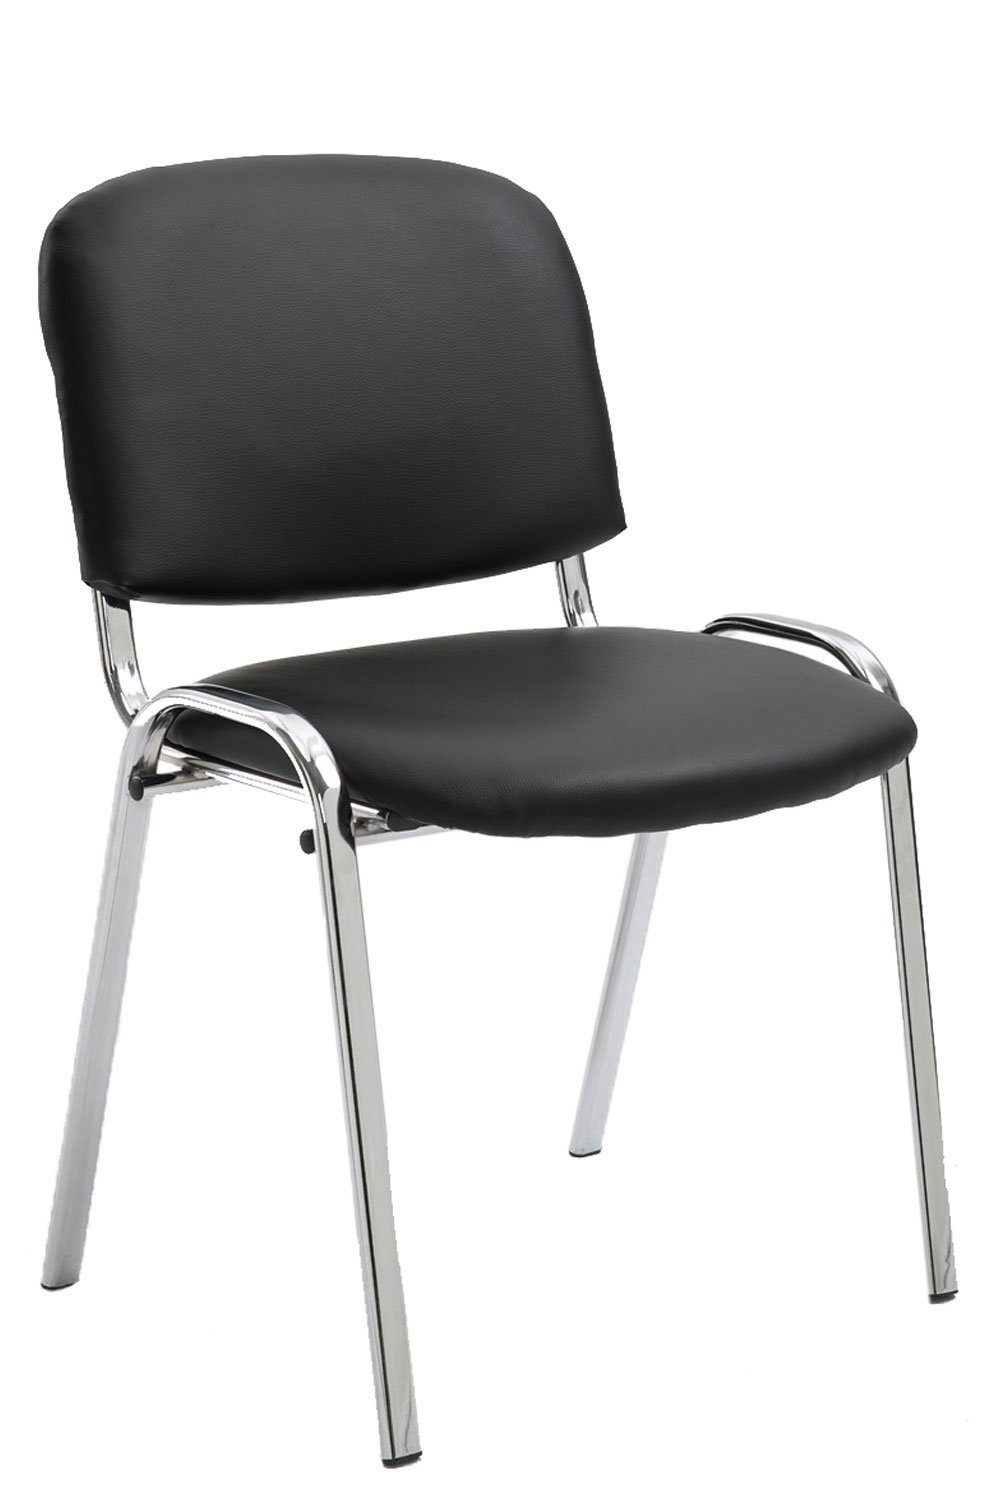 TPFLiving Besucherstuhl Keen mit hochwertiger Polsterung - Konferenzstuhl (Besprechungsstuhl - Warteraumstuhl - Messestuhl), Gestell: Metall chrom - Sitzfläche: Kunstleder schwarz